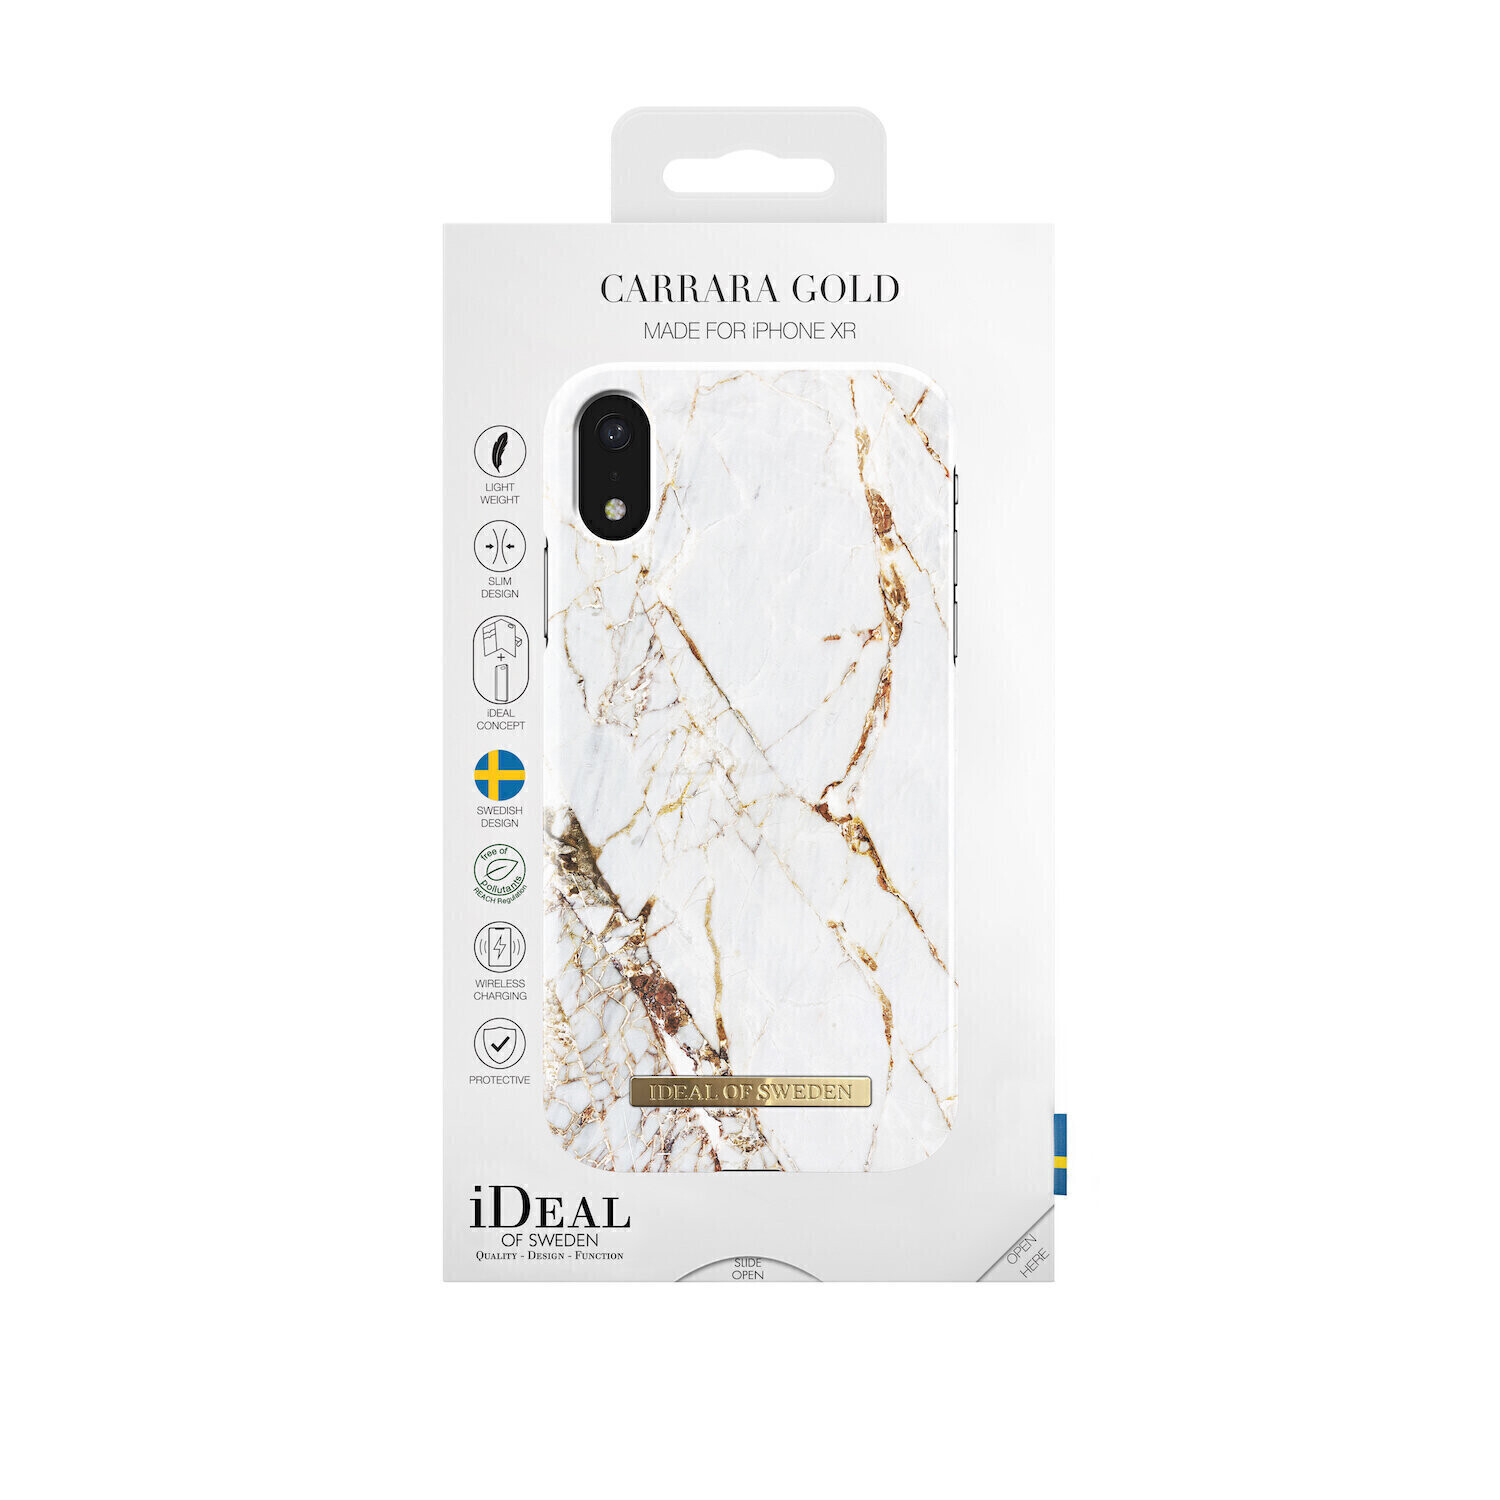 iDeal Of Sweden iPhone XR Fashion Case A/W 16-17, Carrara Gold